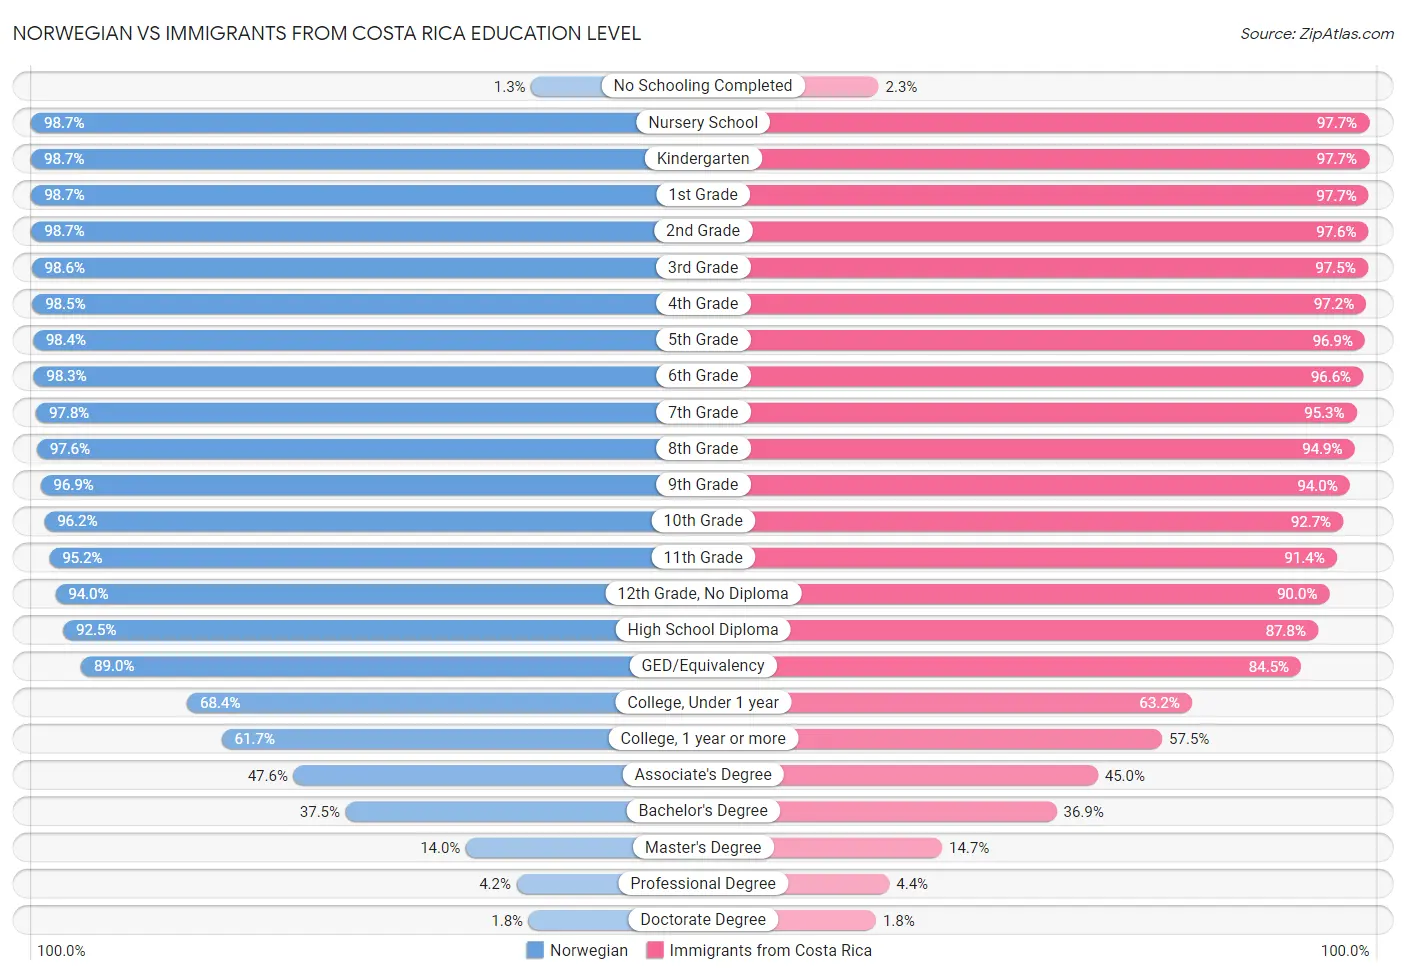 Norwegian vs Immigrants from Costa Rica Education Level